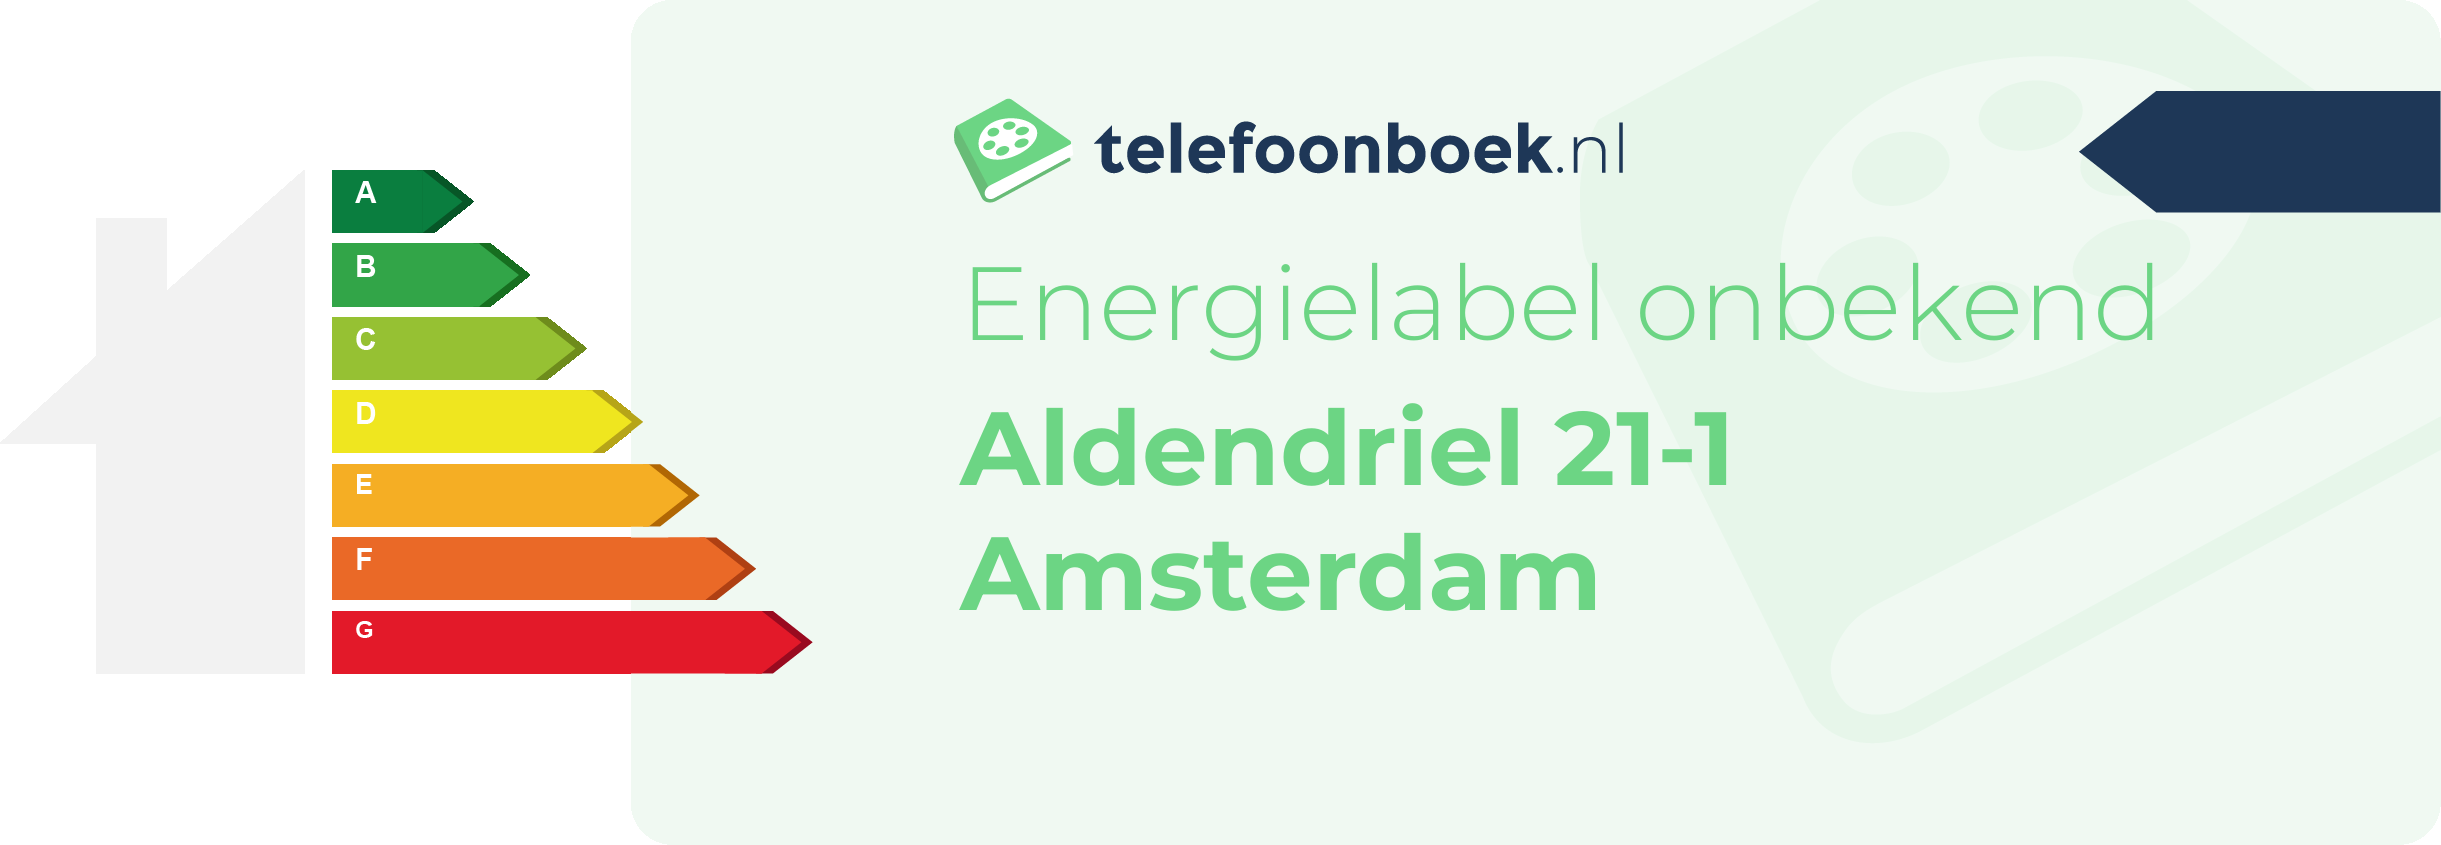 Energielabel Aldendriel 21-1 Amsterdam